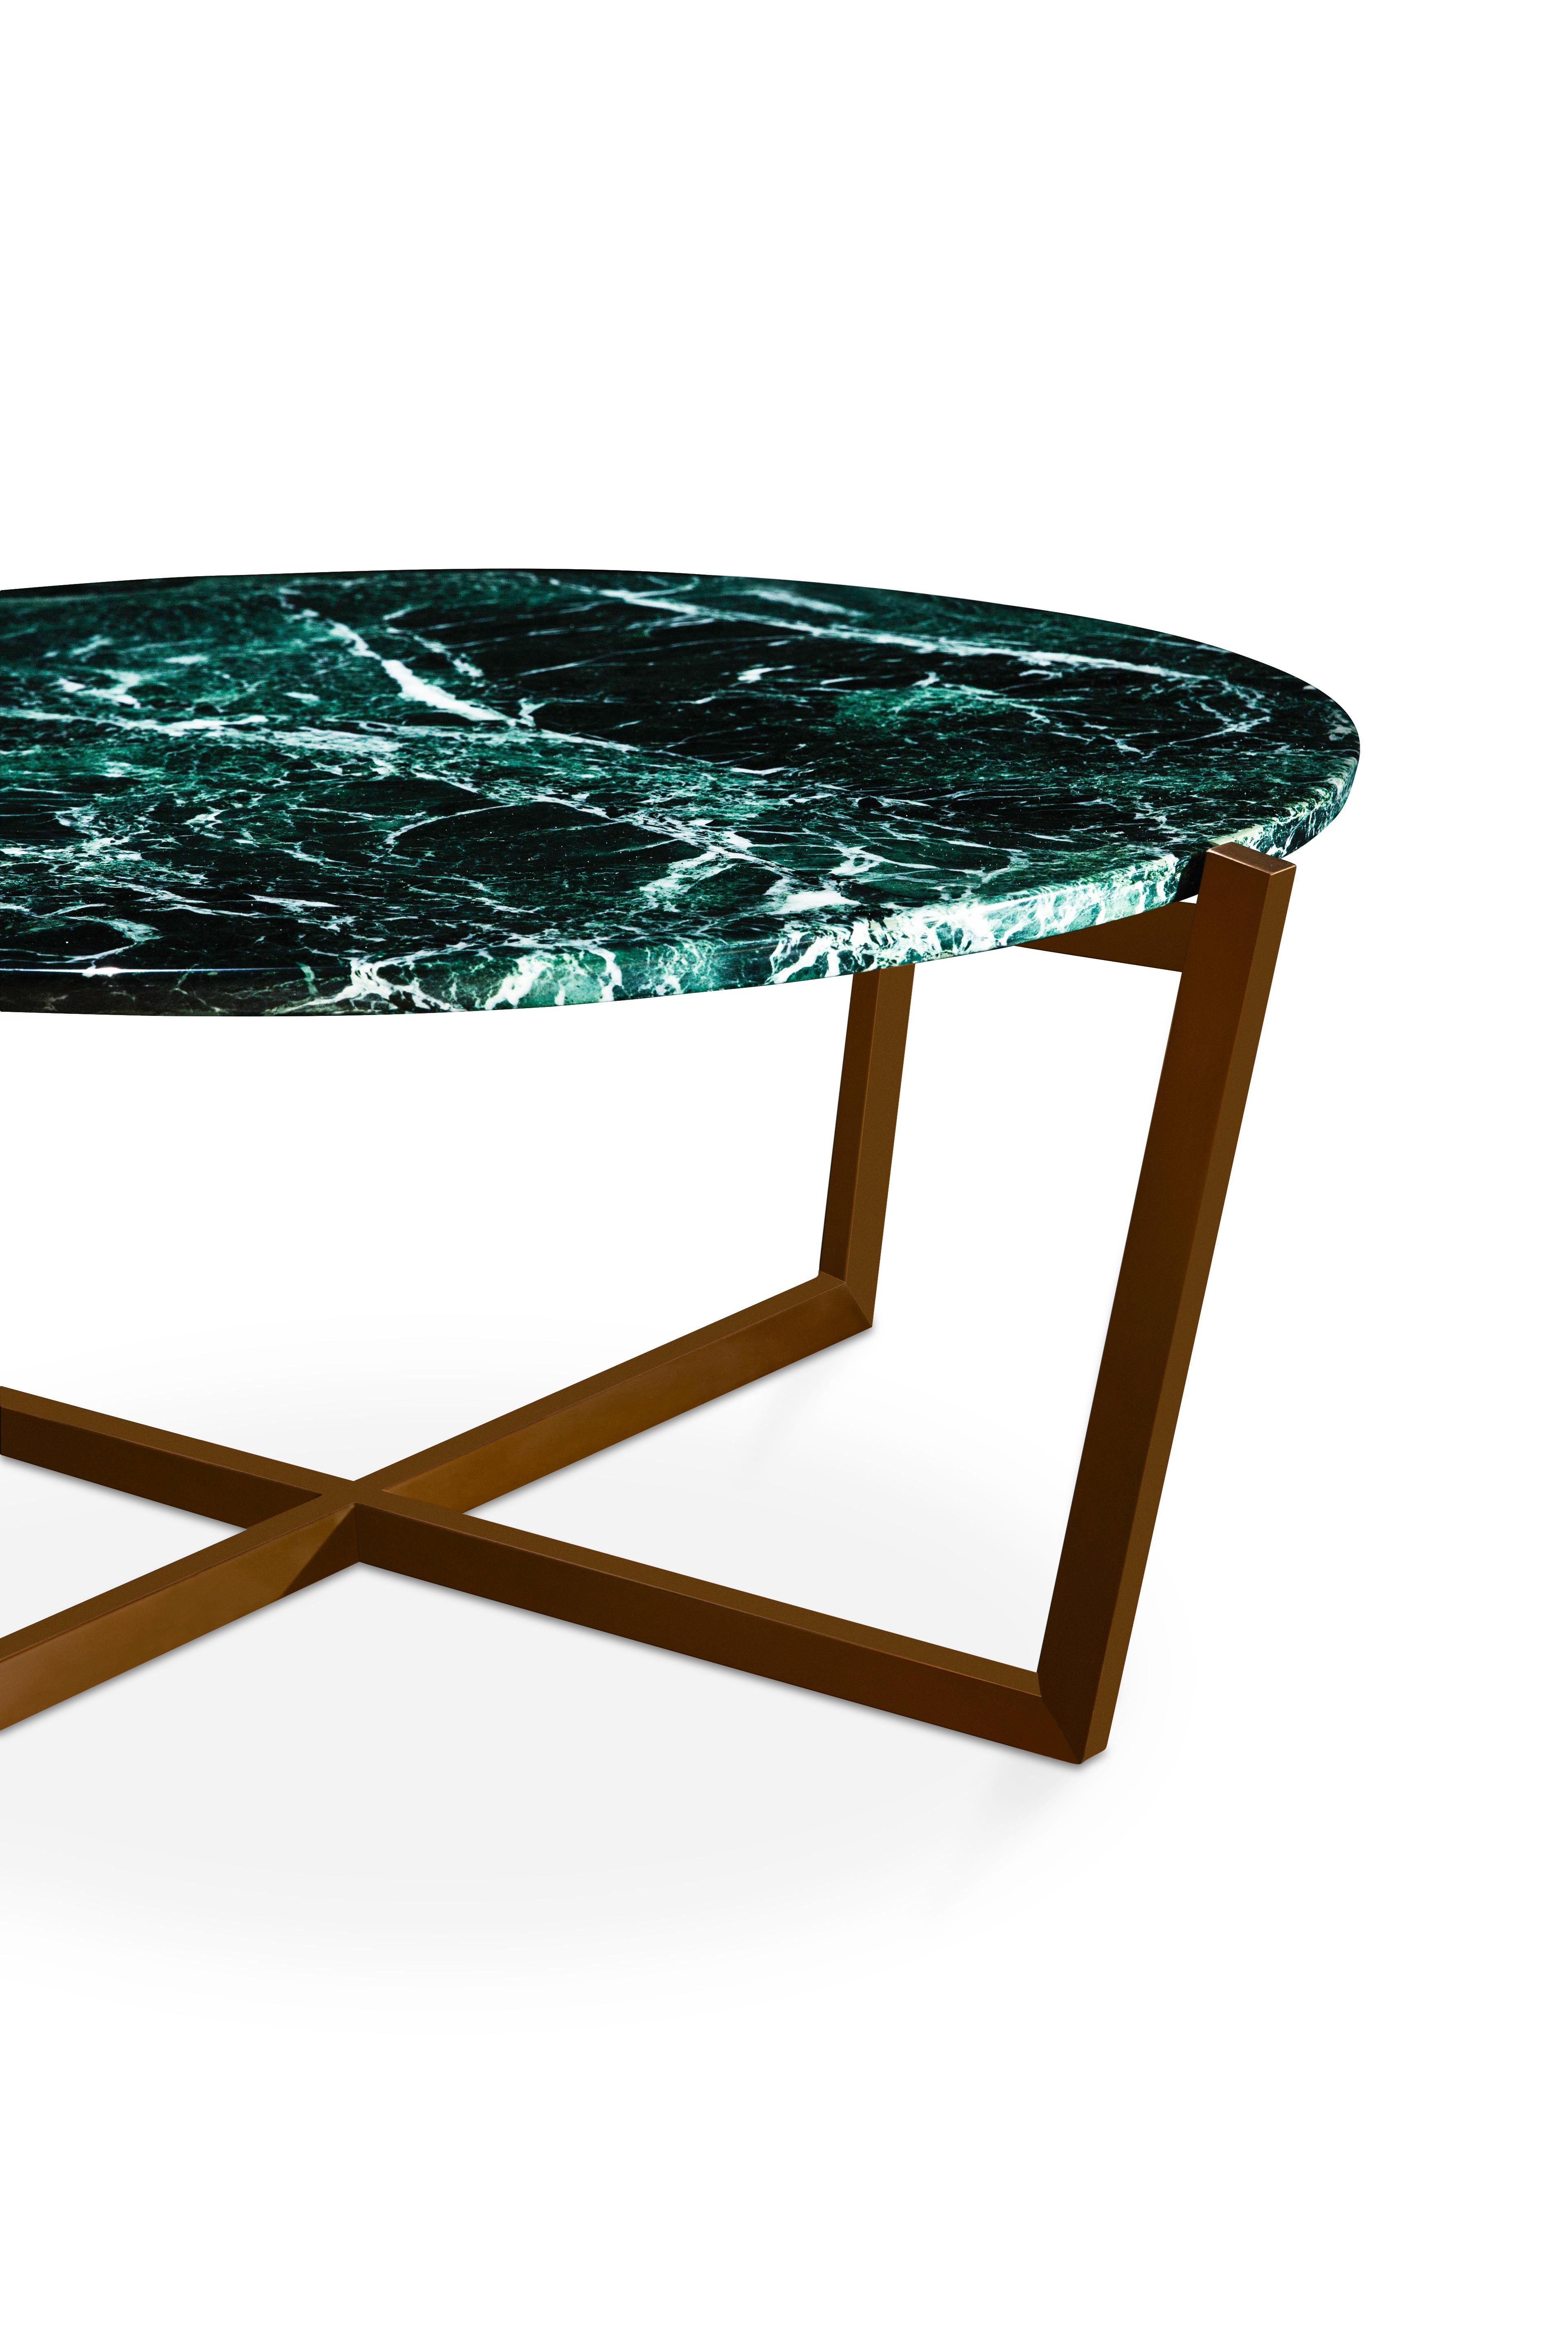 Polished NORDST EMMA Dining Table, Italian Black Eagle Marble, Danish Modern Design, New For Sale